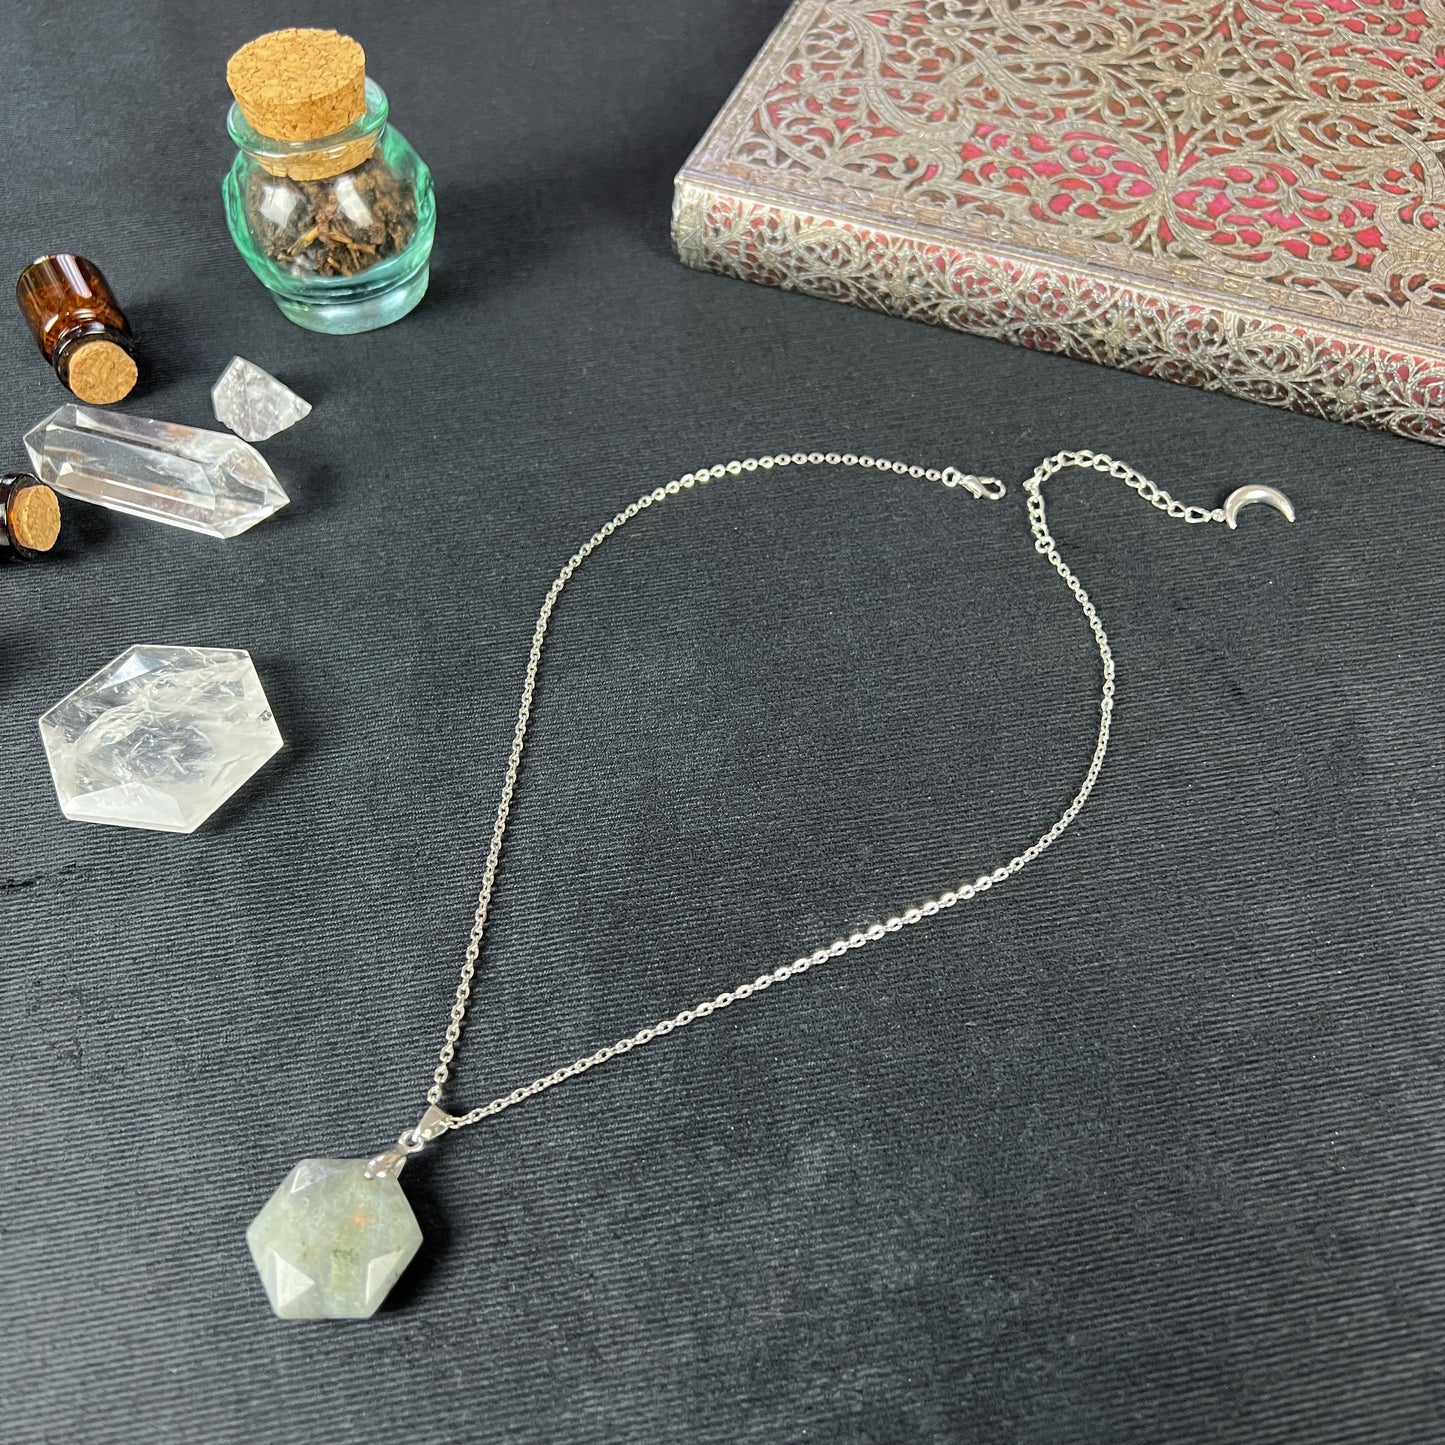 Gemstone hexagon necklace in lapis lazuli, rose quartz, quartz, amethyst or labradorite, crystal necklace with a crescent moon 